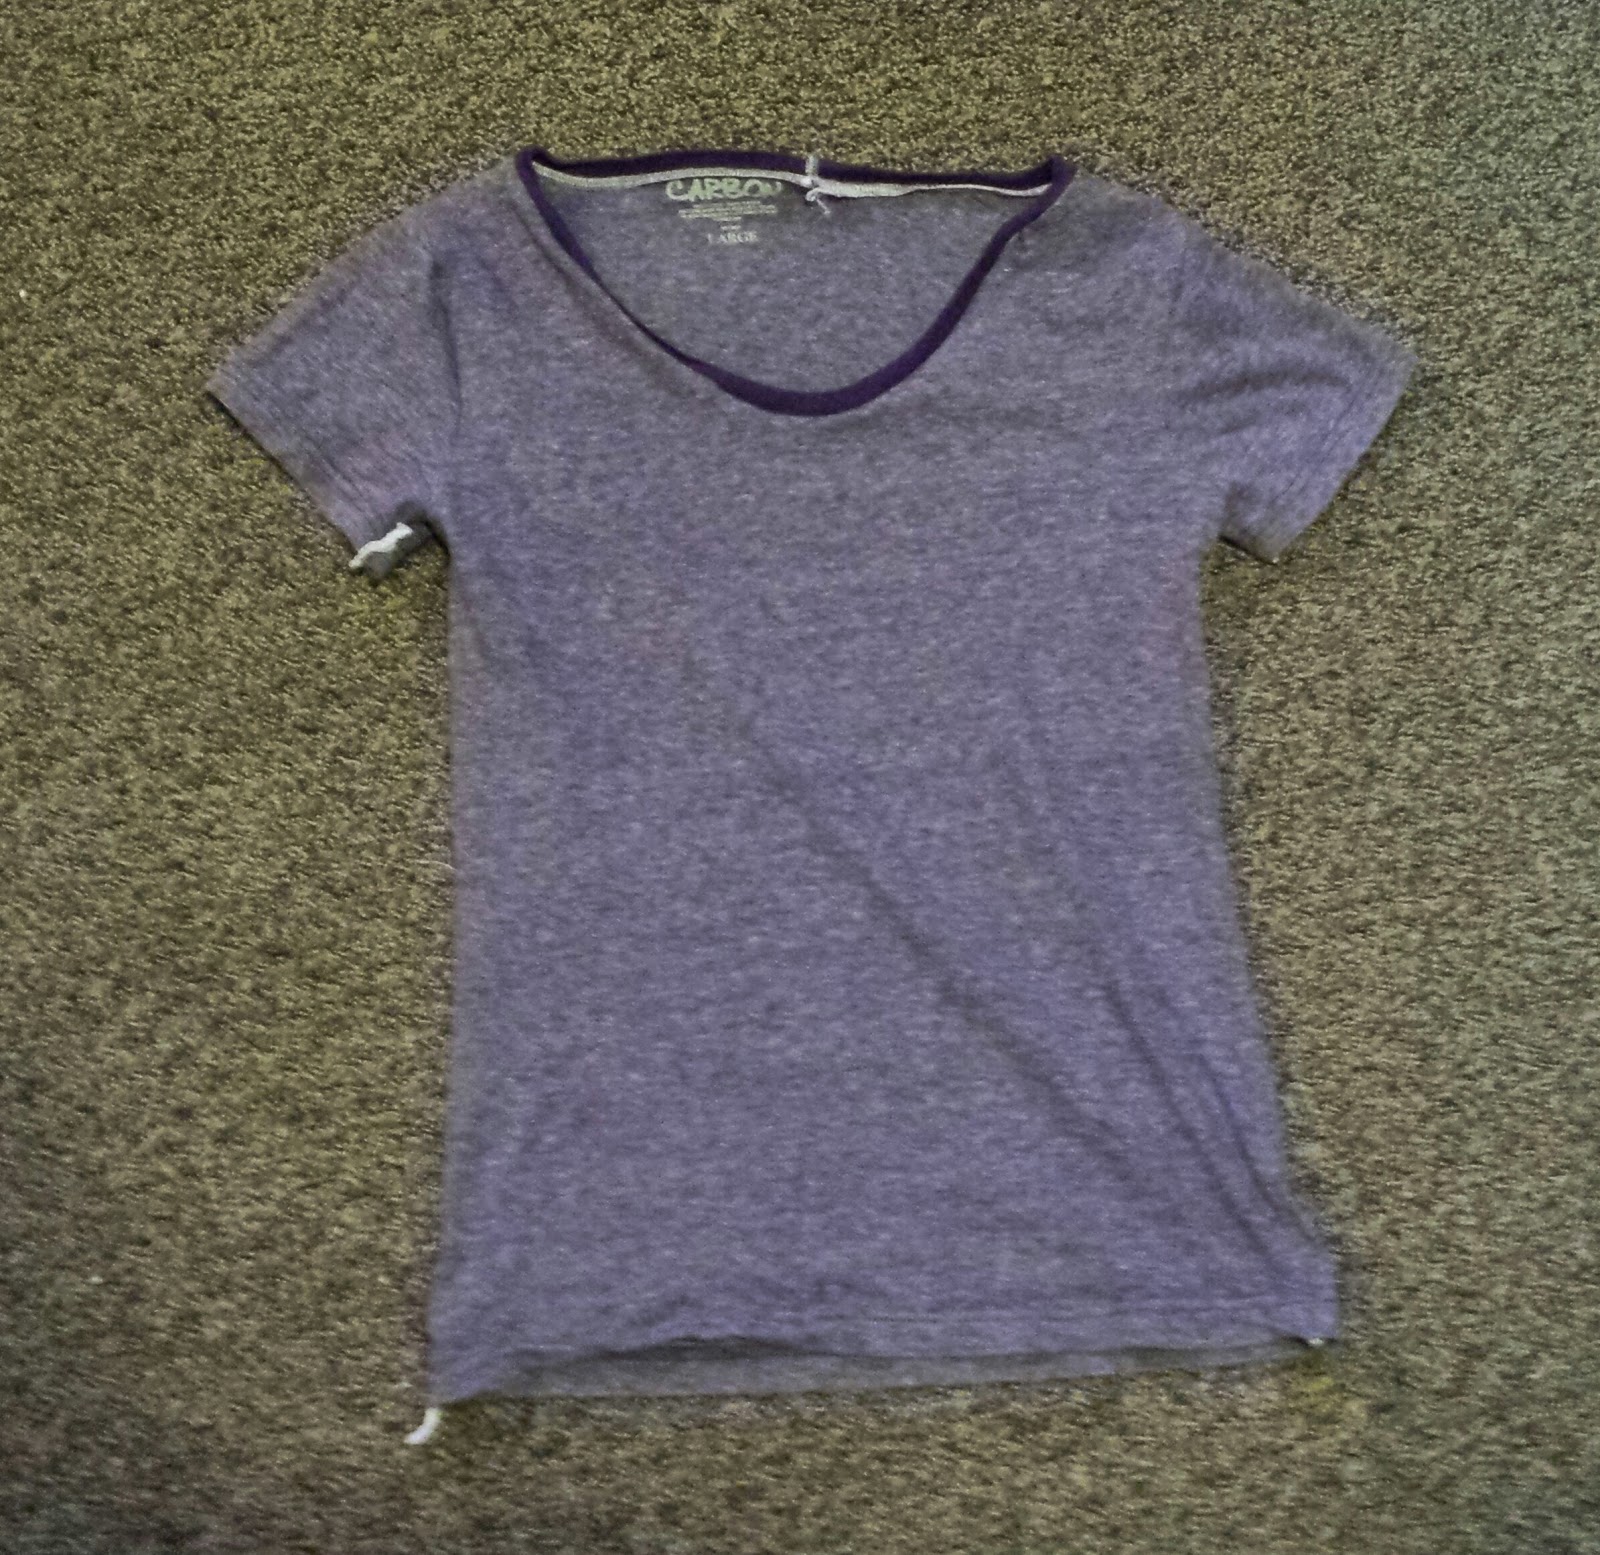 Everything Springer A to Z: Closet Refashion--Braided Collar T-shirt ...